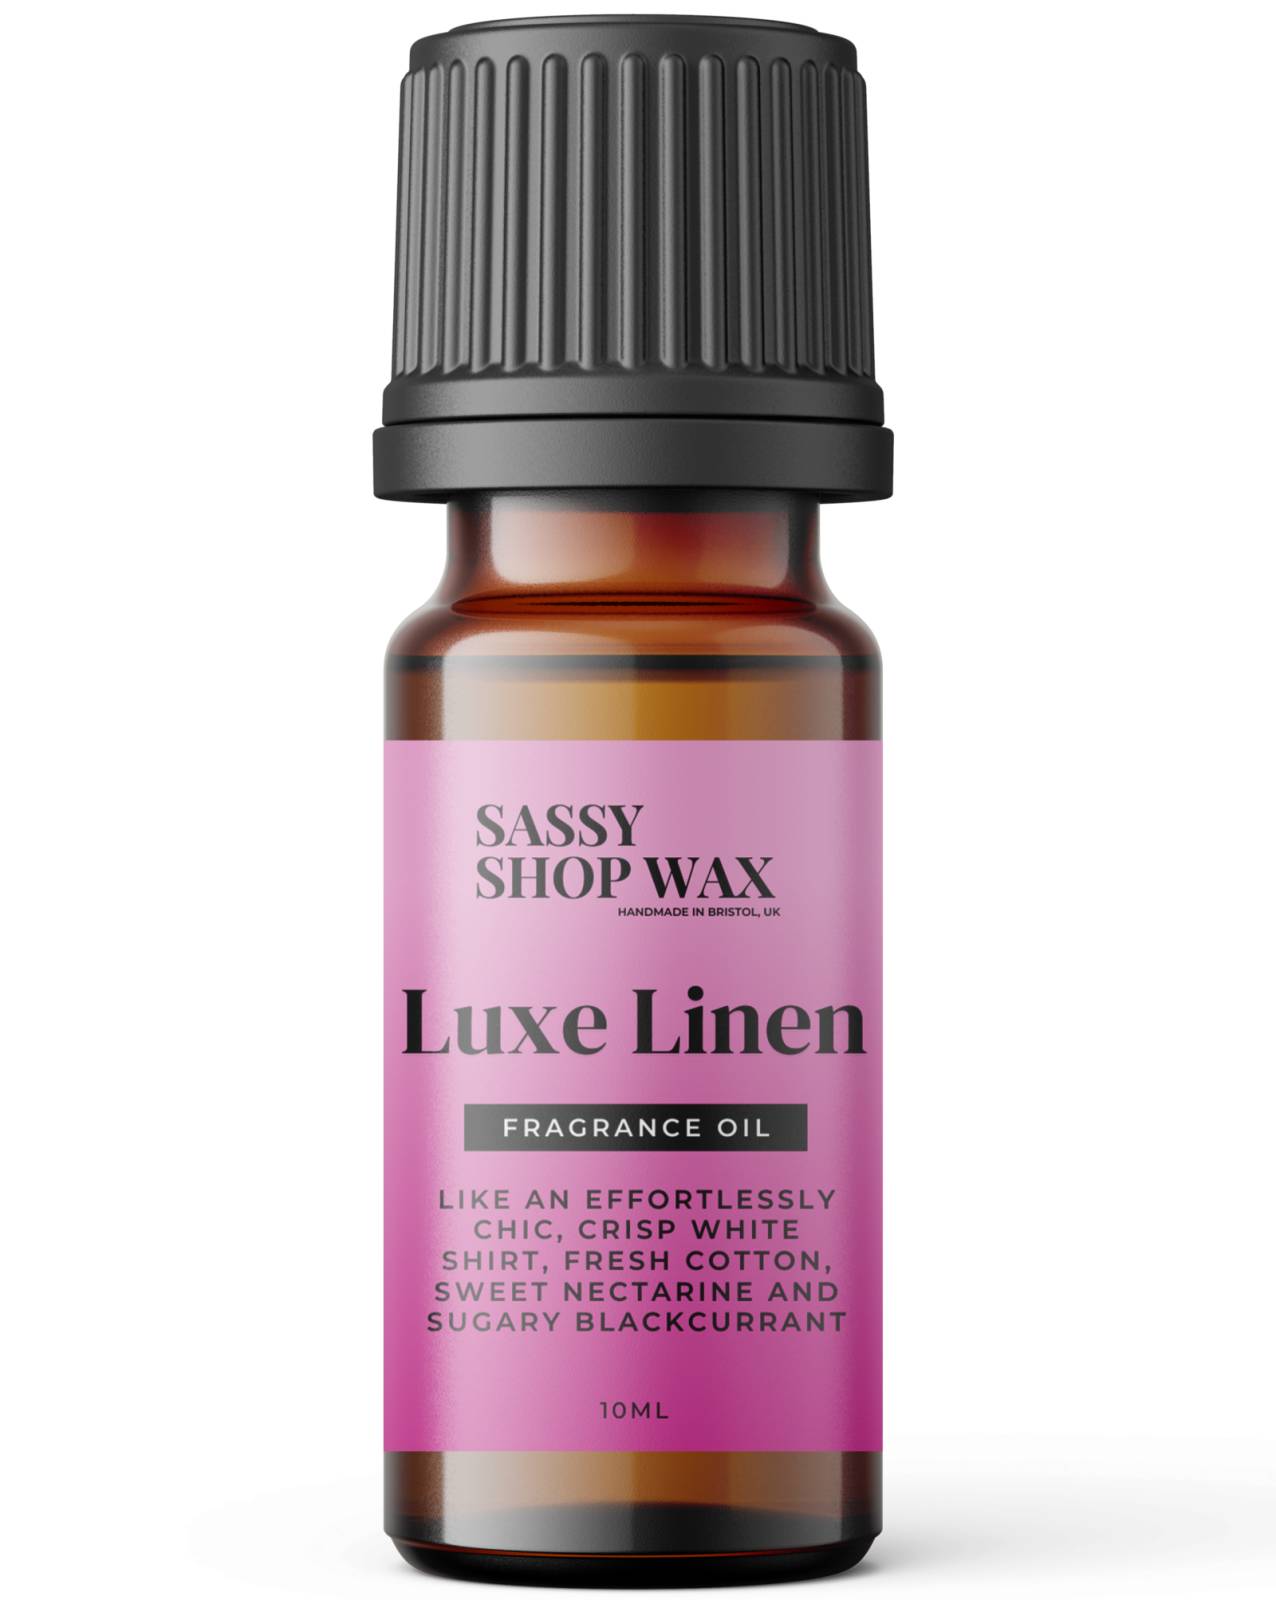 Sassy Shop Wax Luxe Linen Fragrance Oil 10ml